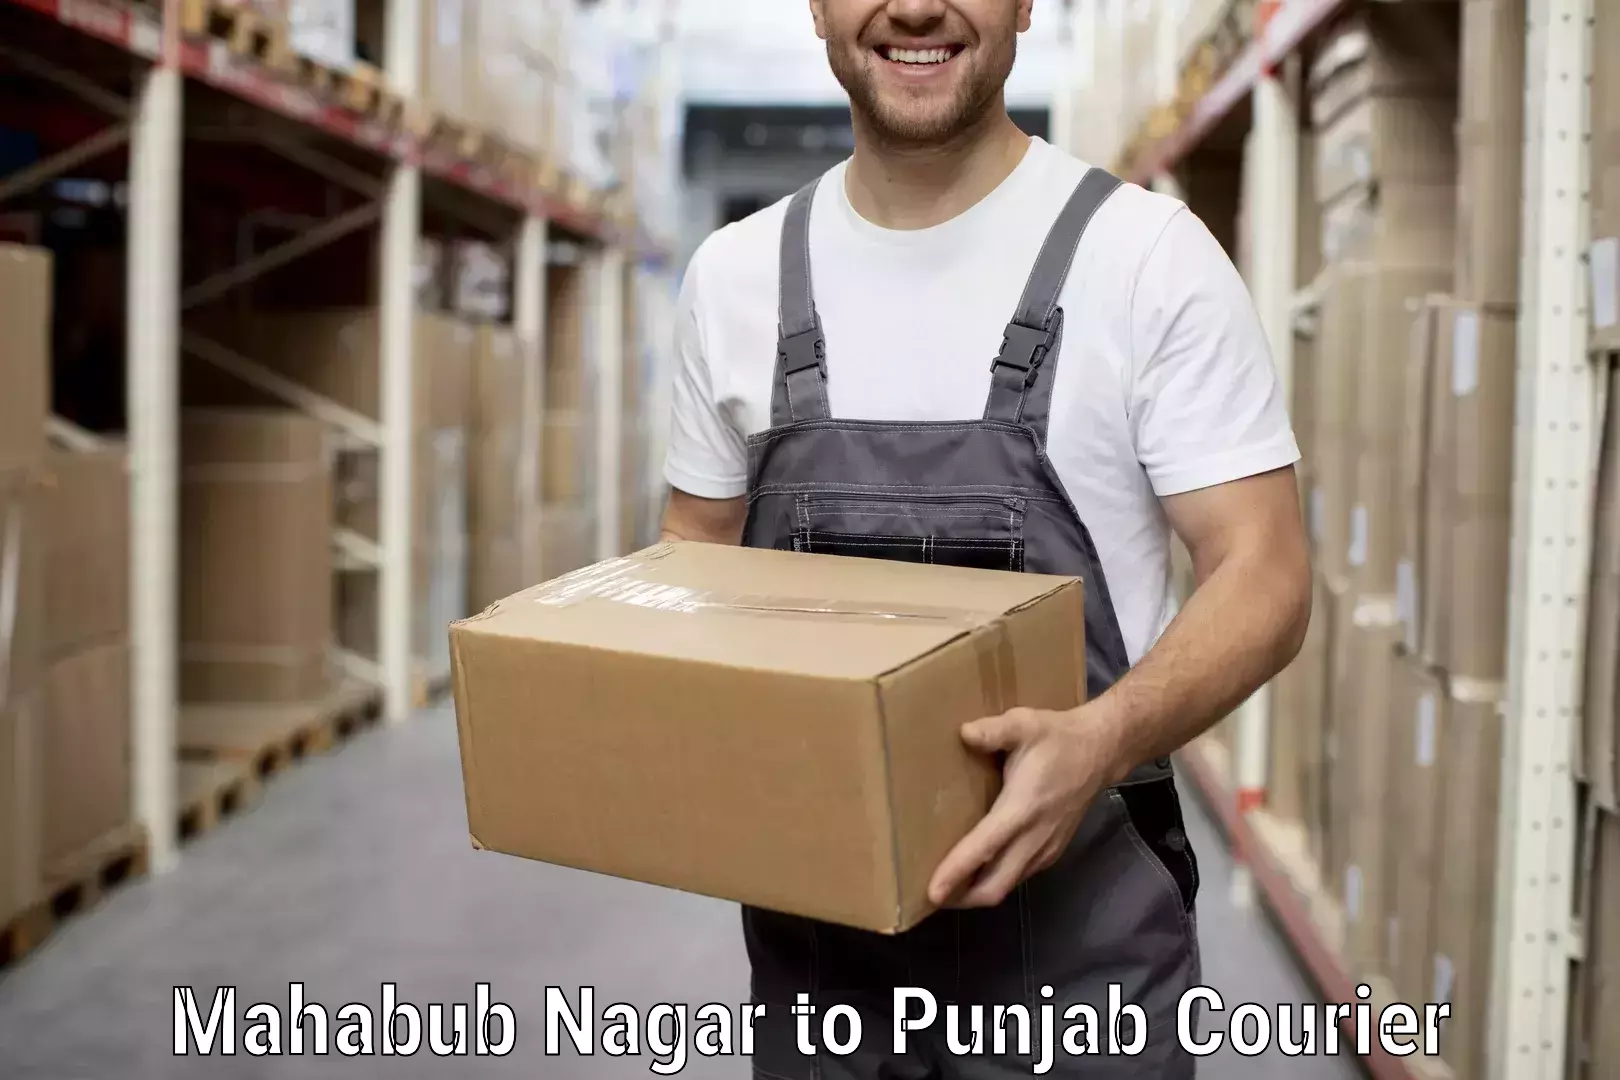 Furniture delivery service Mahabub Nagar to Goindwal Sahib